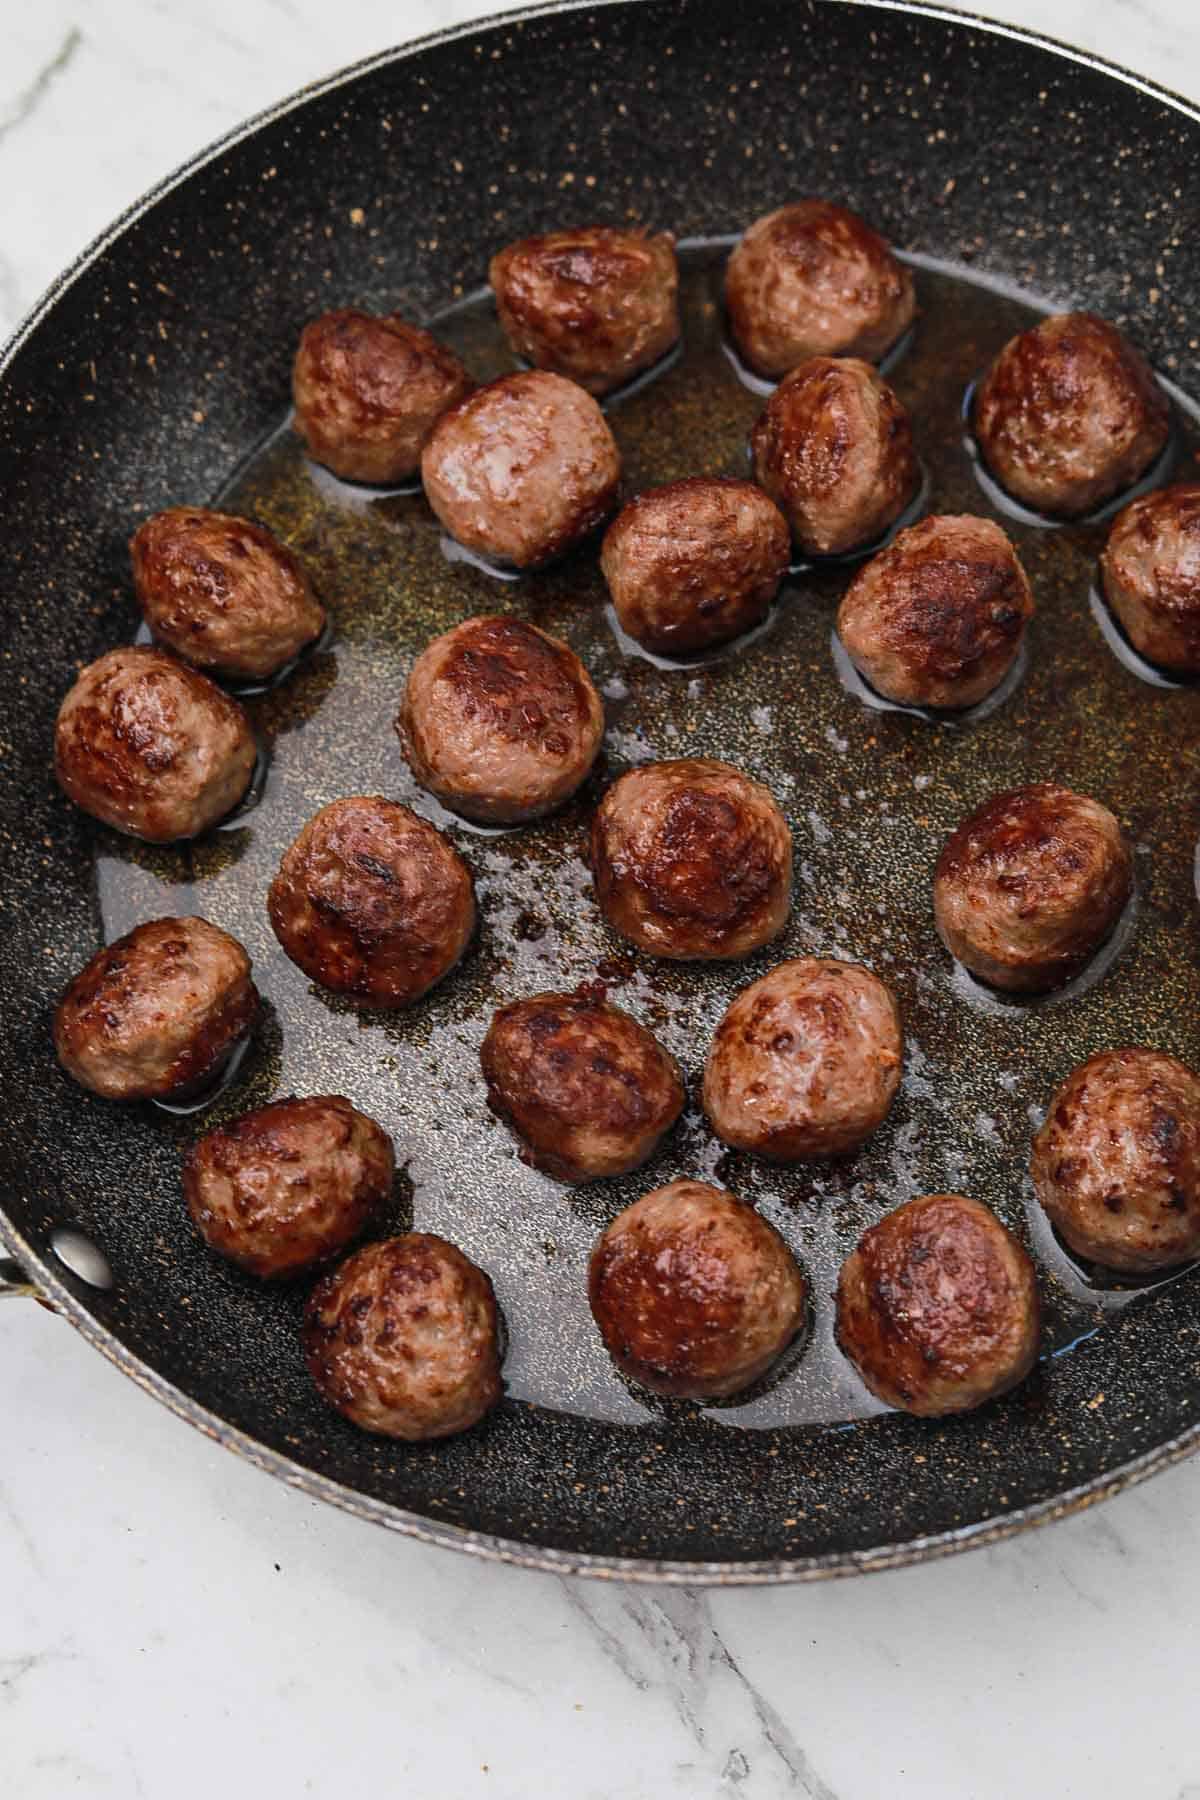 Fried meatballs in a skillet.